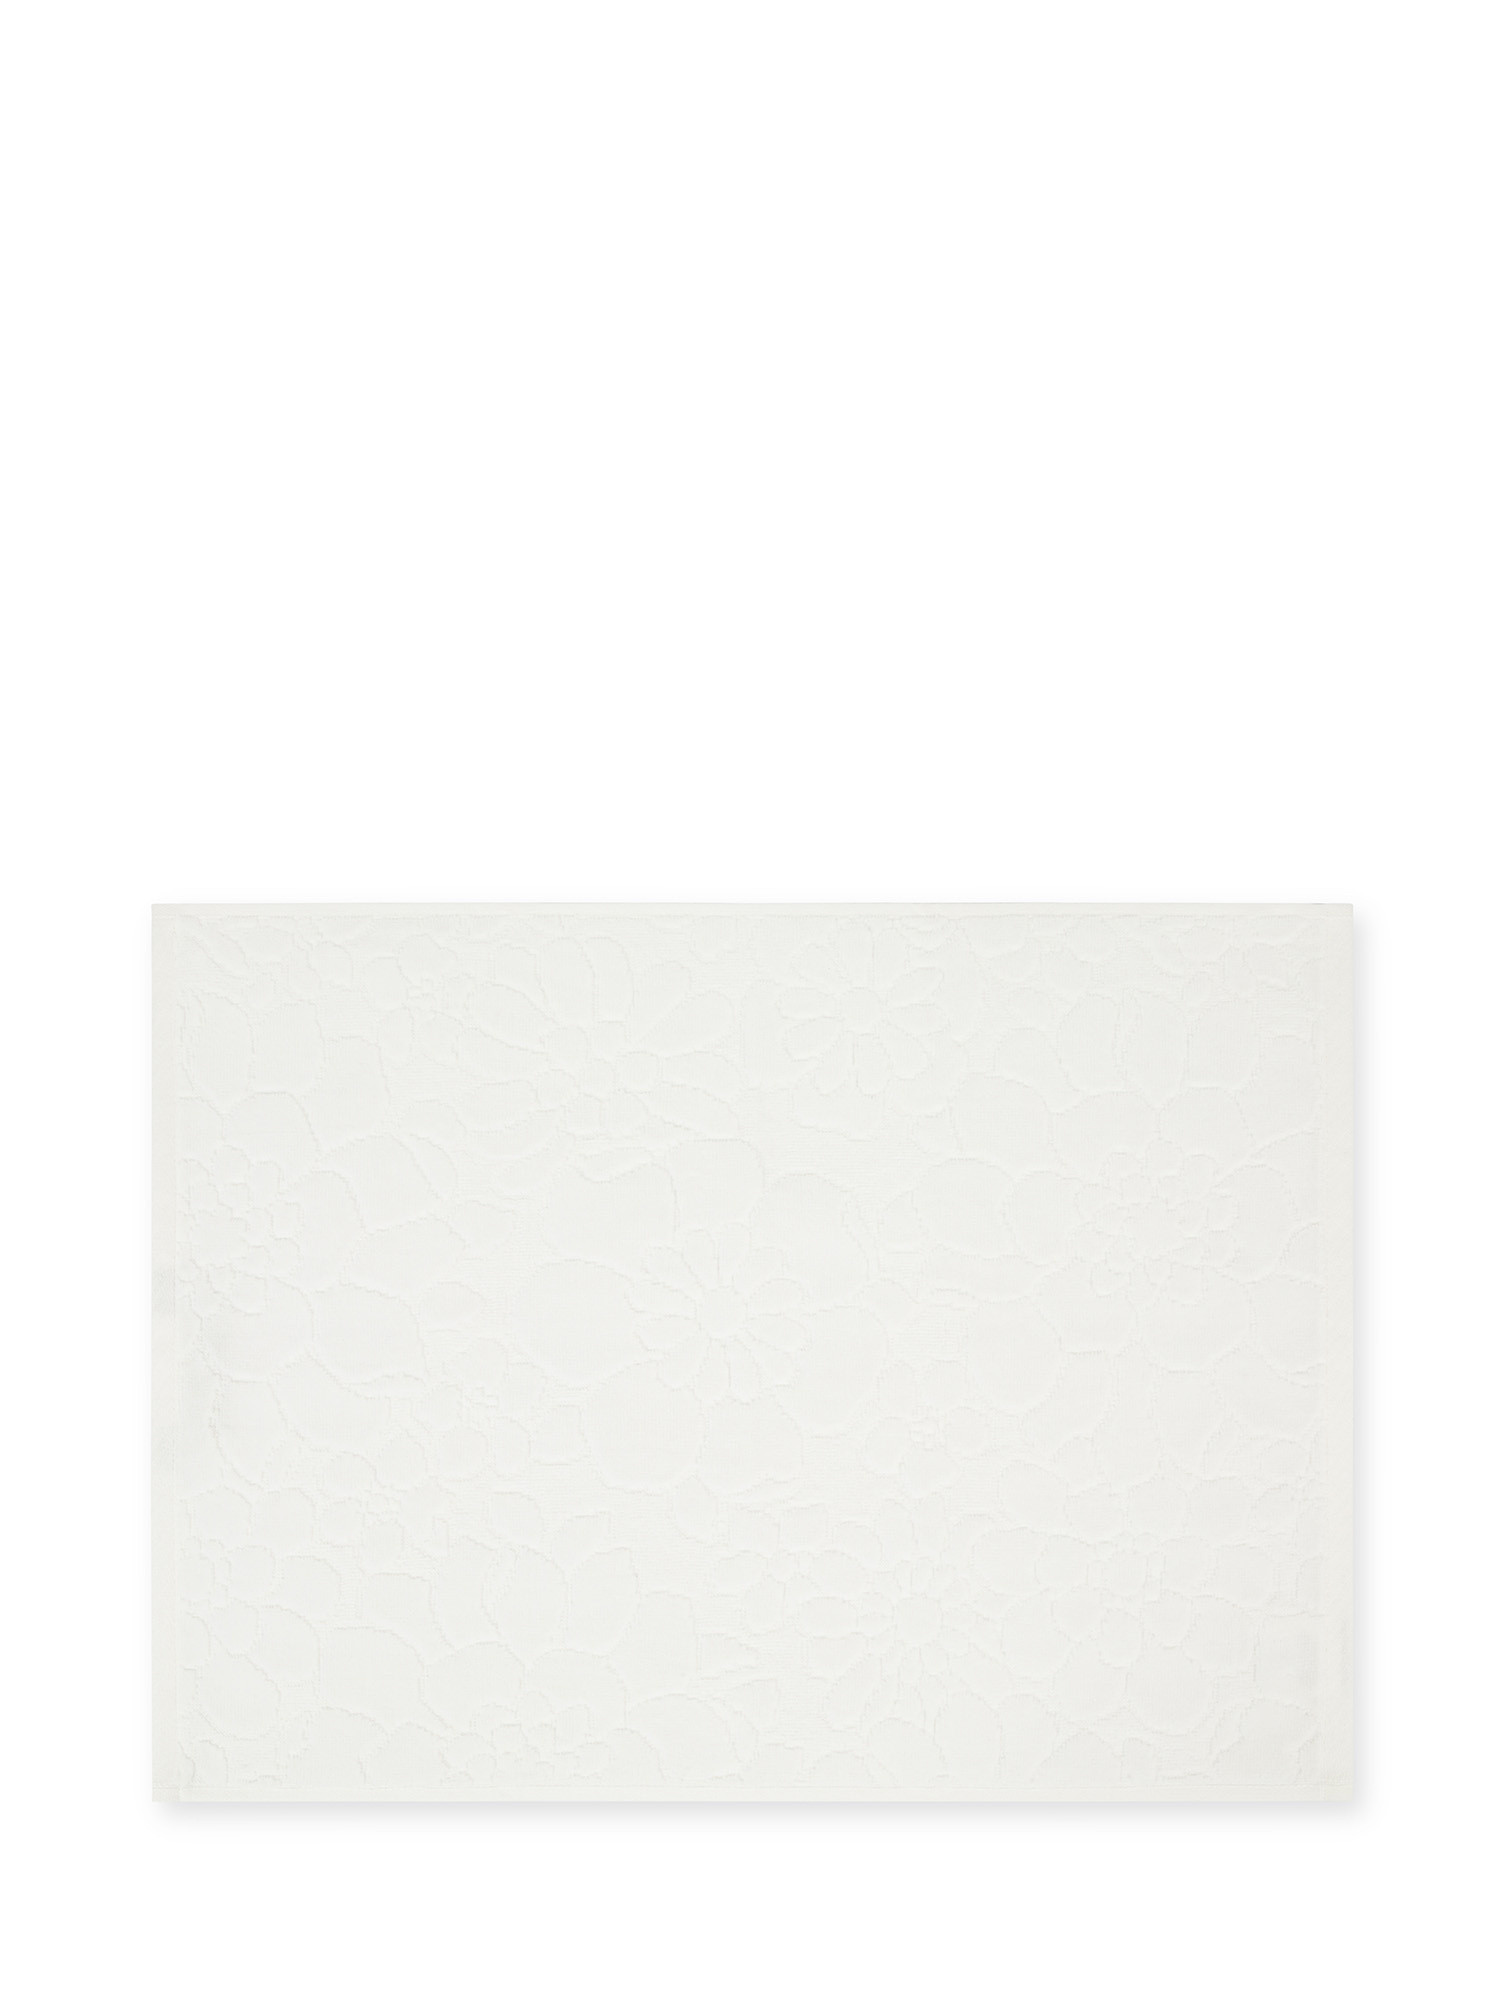 Asciugamano cotone velour motivo floreale a rilievo, Bianco, large image number 1